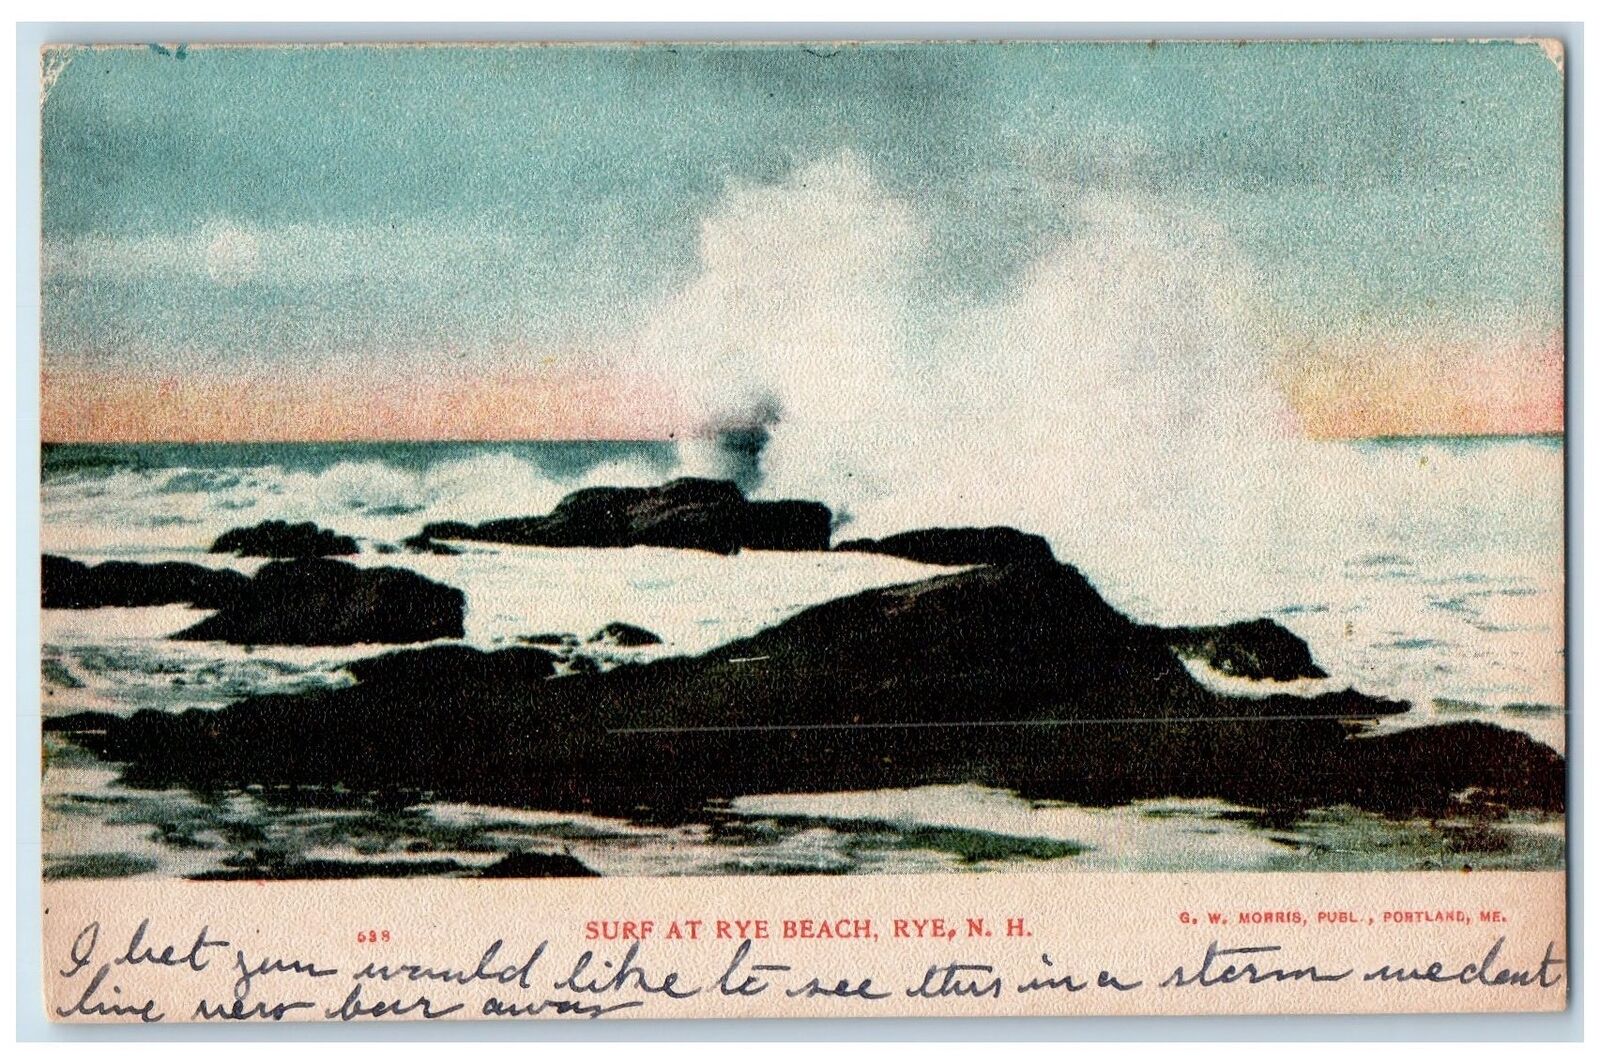 c1905 Surf At Rye Beach Huge Waves off Shore Rocks New Hampshire NH Postcard